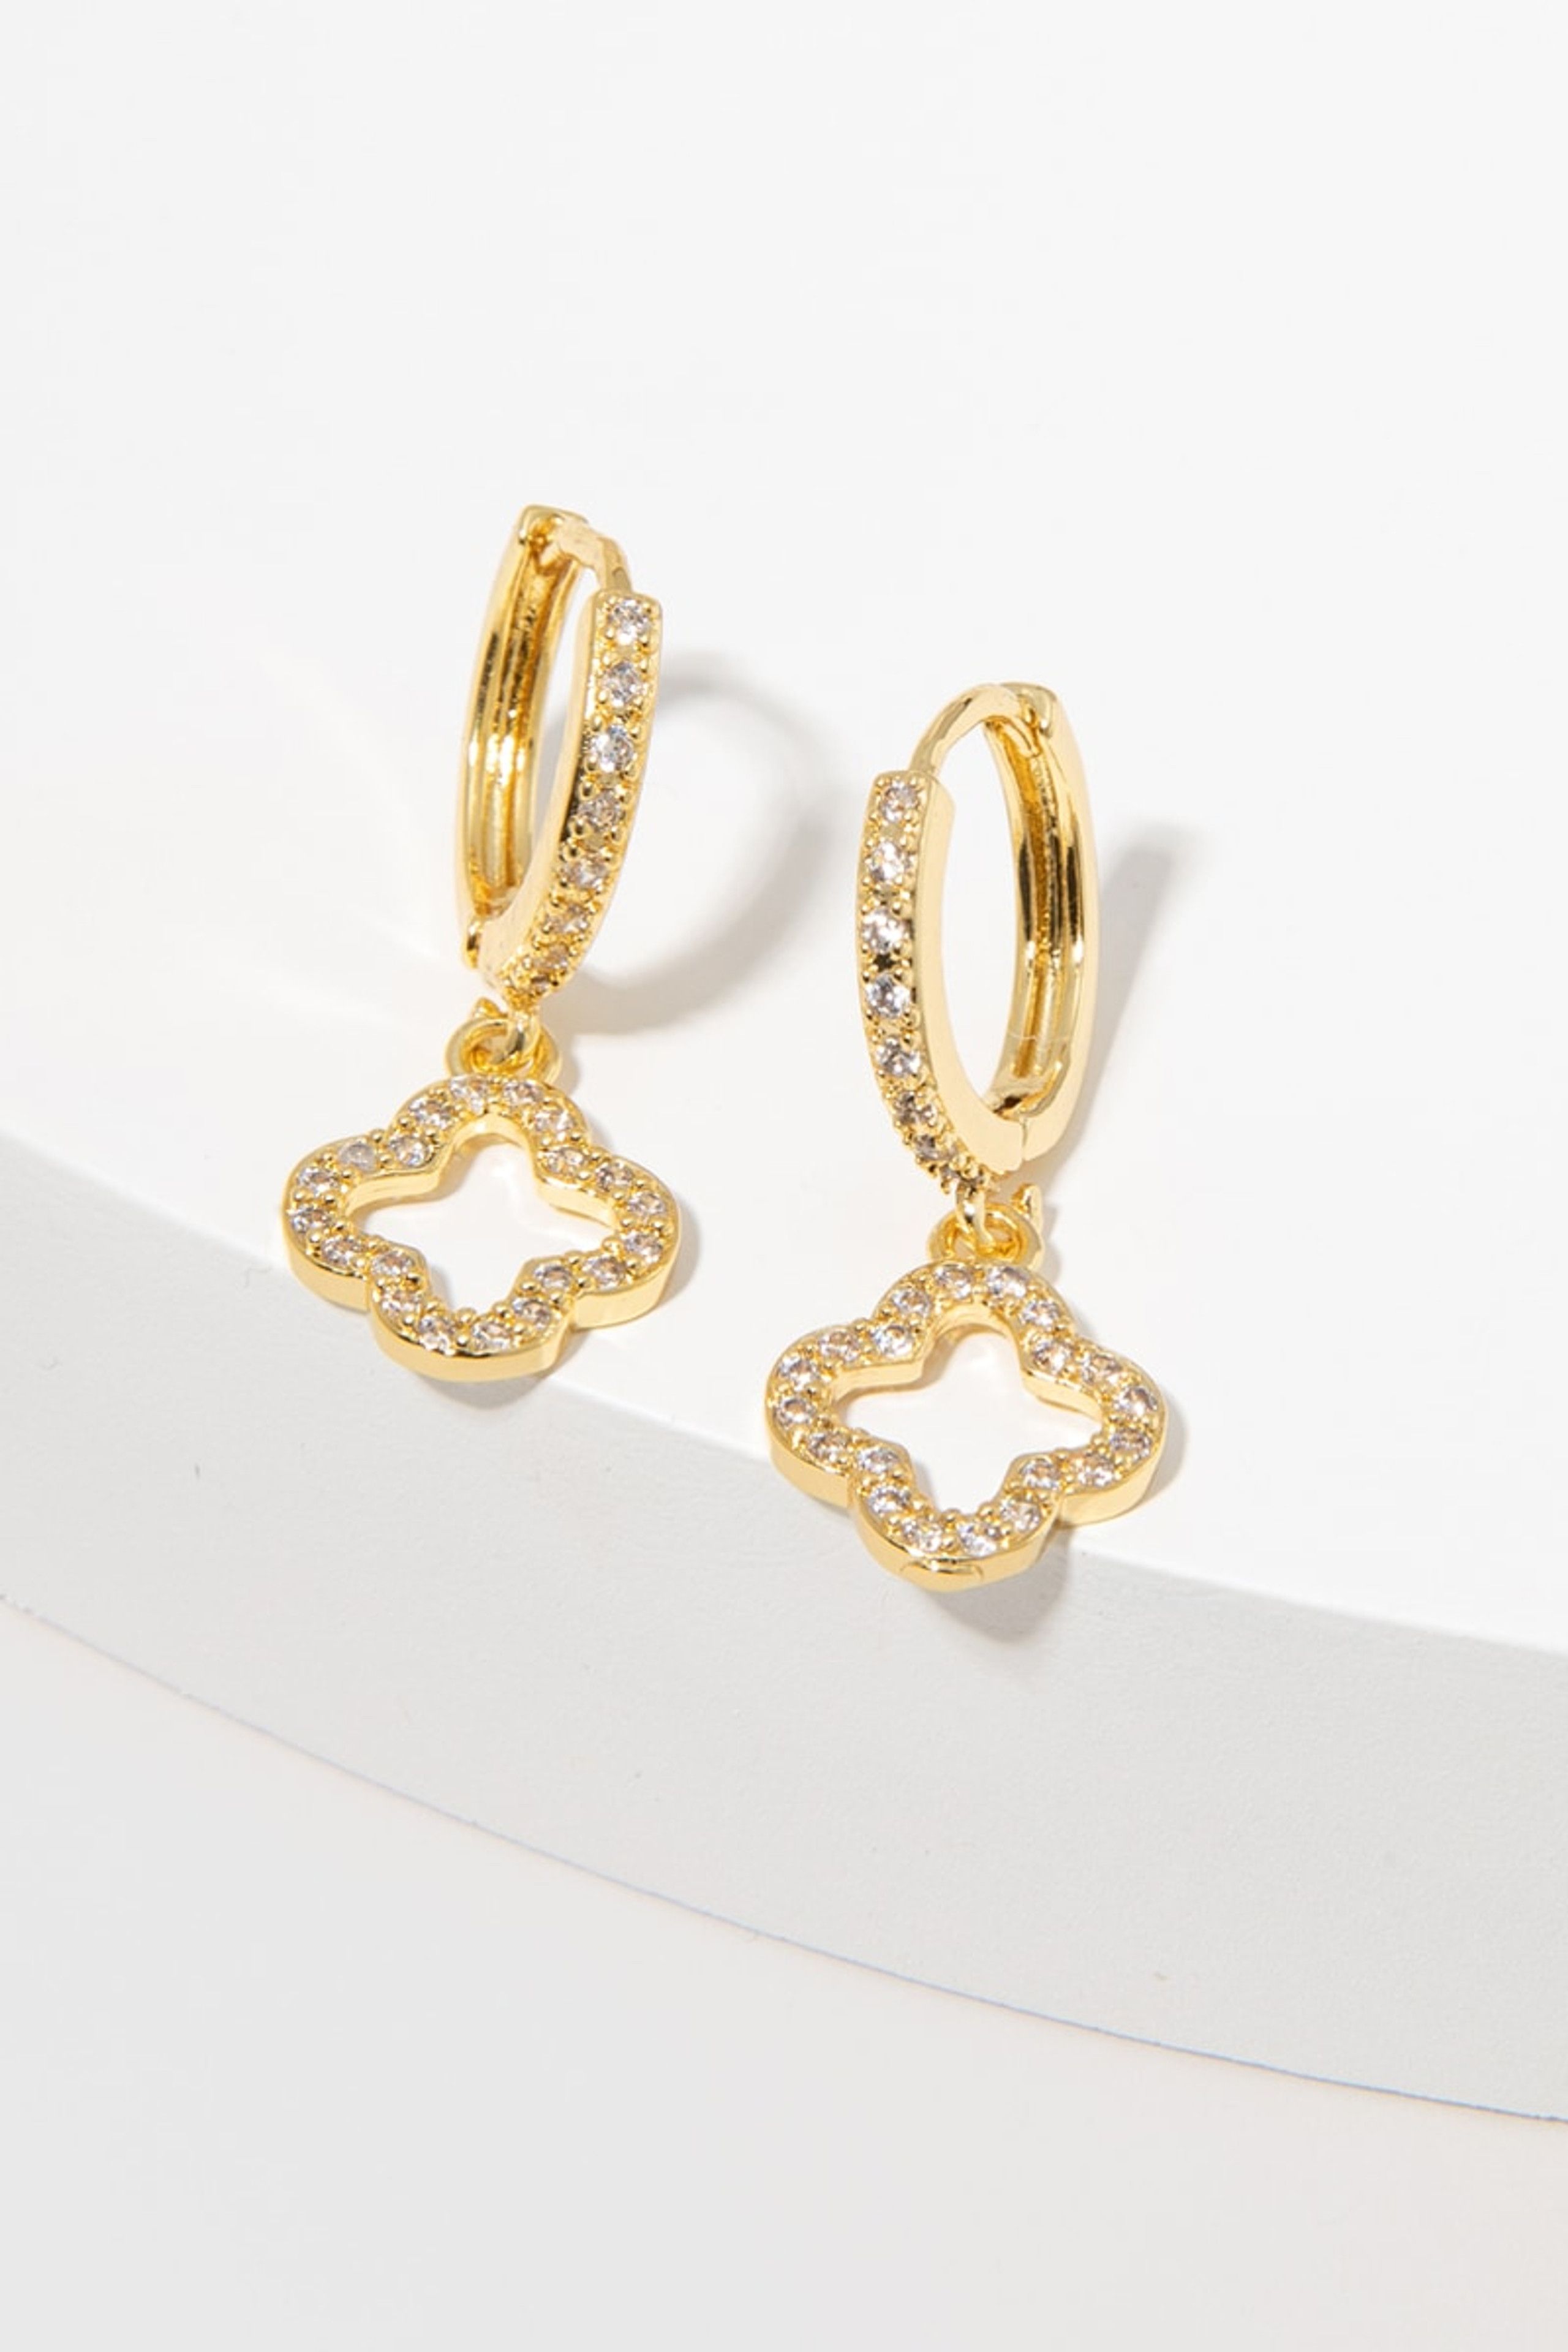 Tasha Gold Clover Earrings | Francesca's